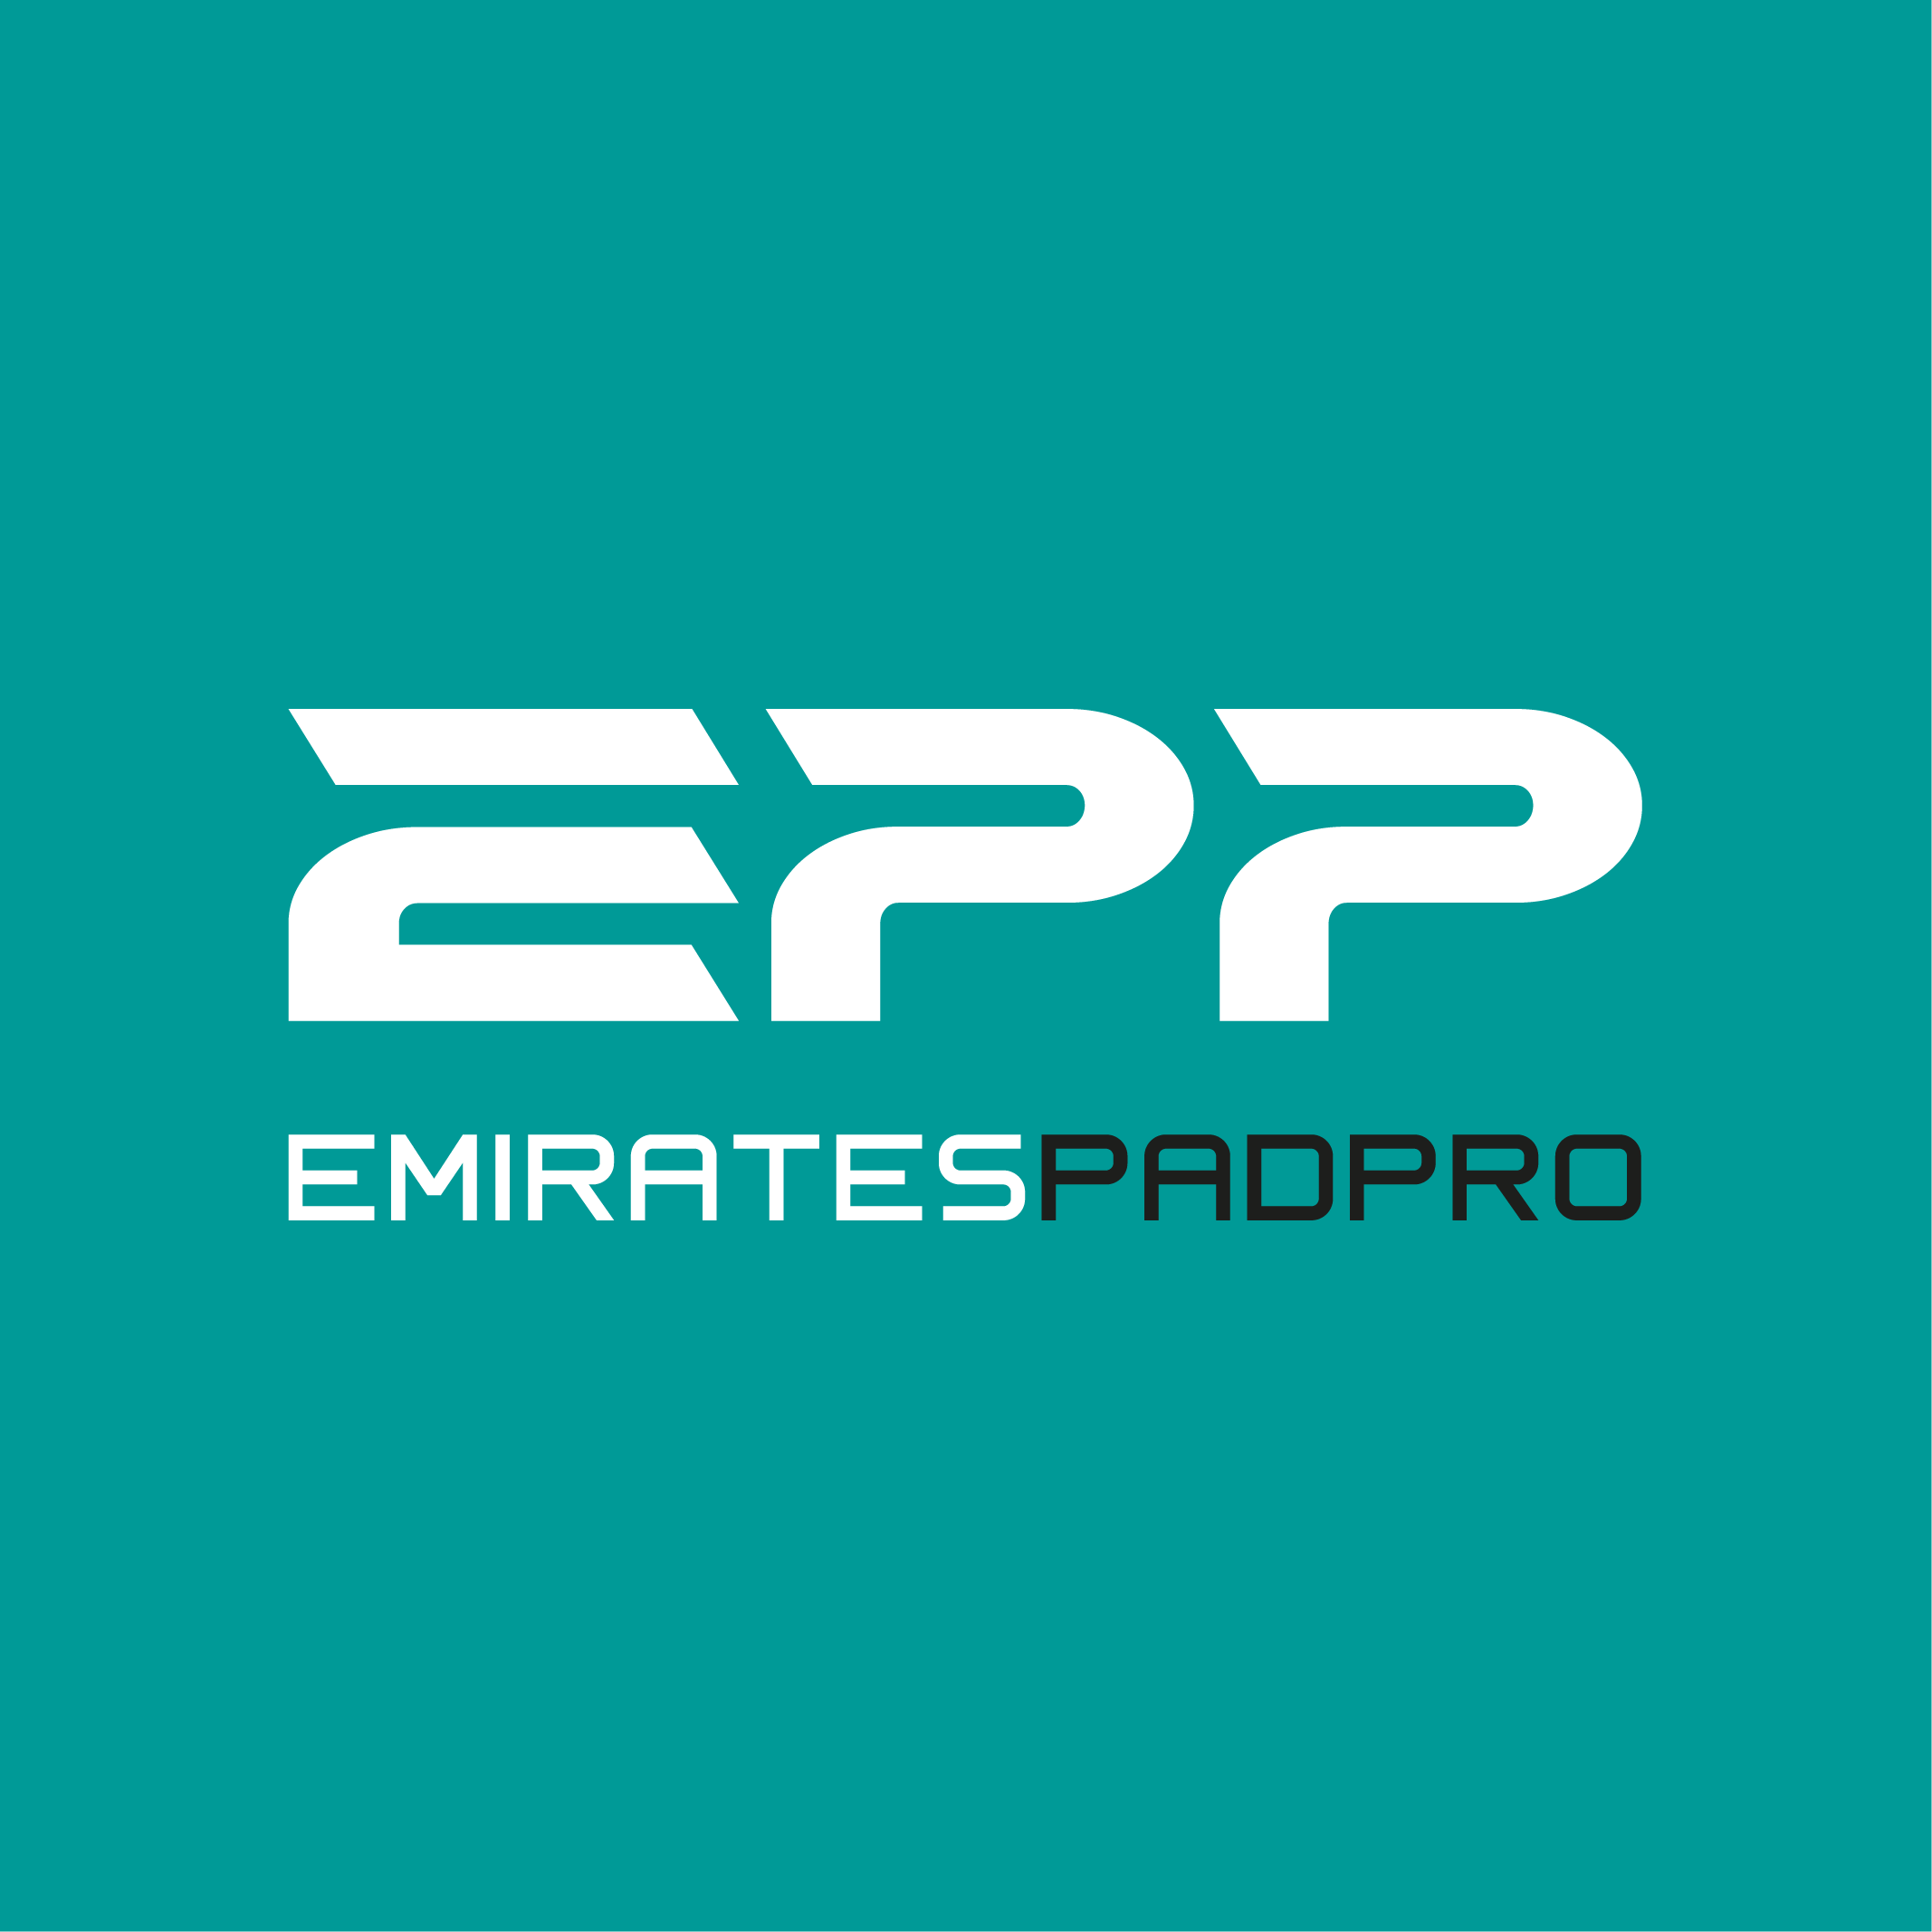 EmiratesPadPro Sports Academy Logo